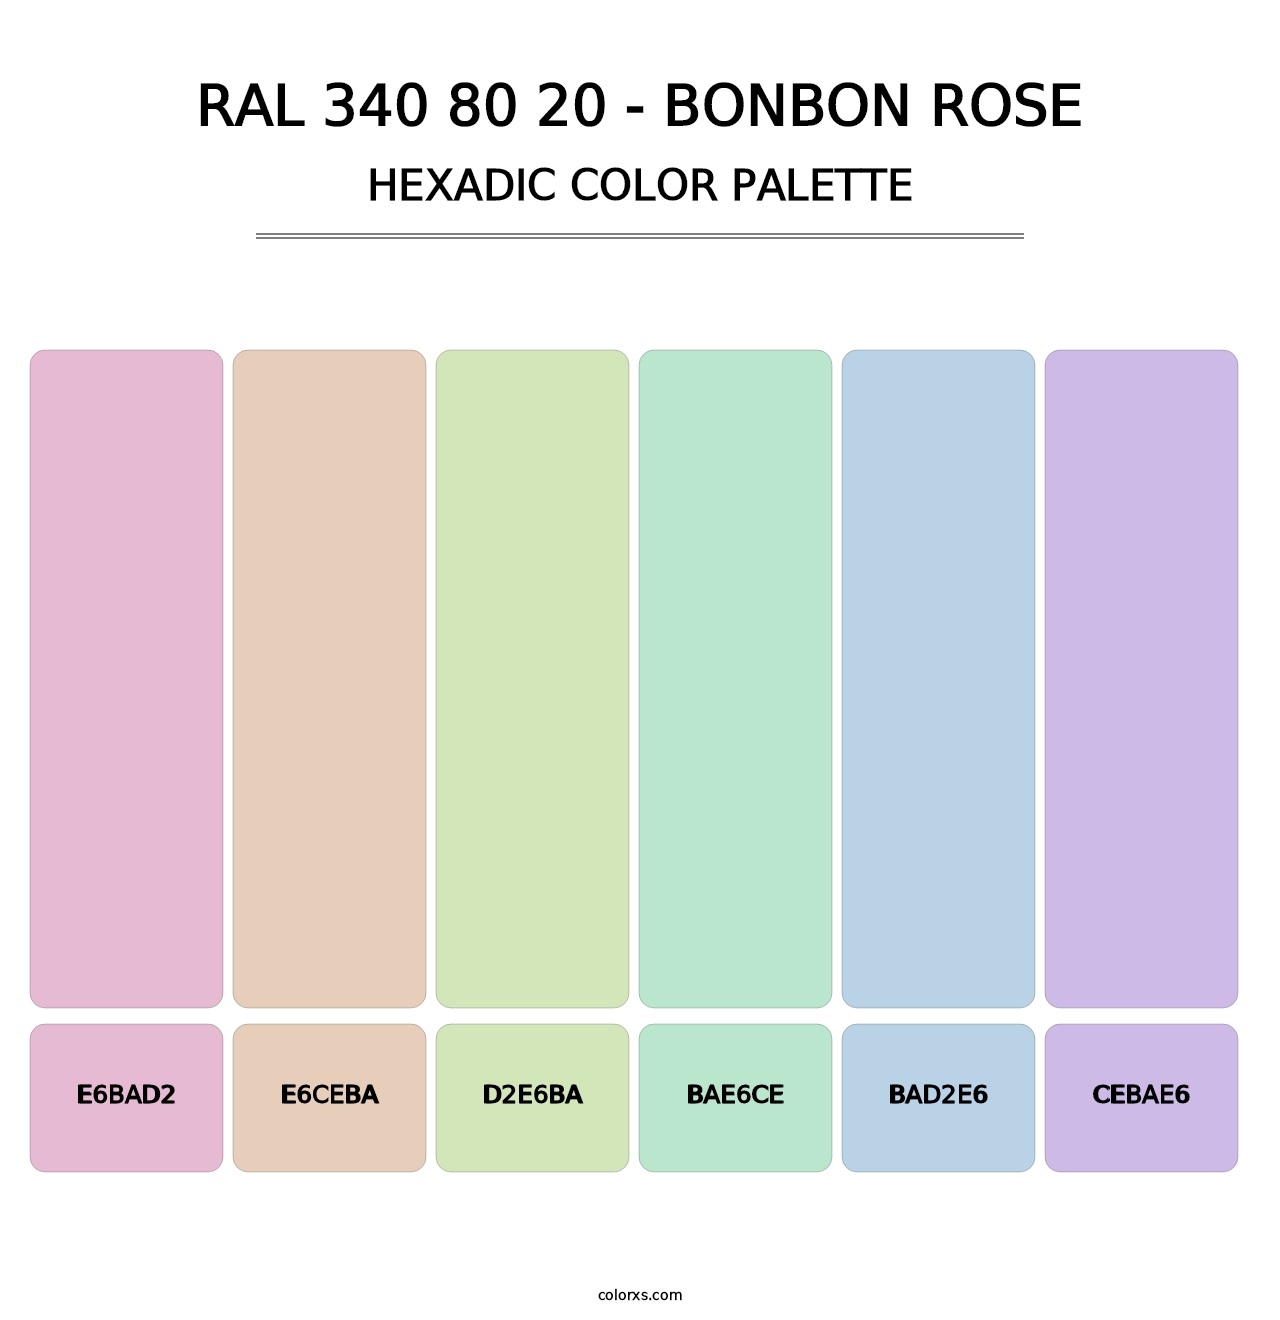 RAL 340 80 20 - Bonbon Rose - Hexadic Color Palette